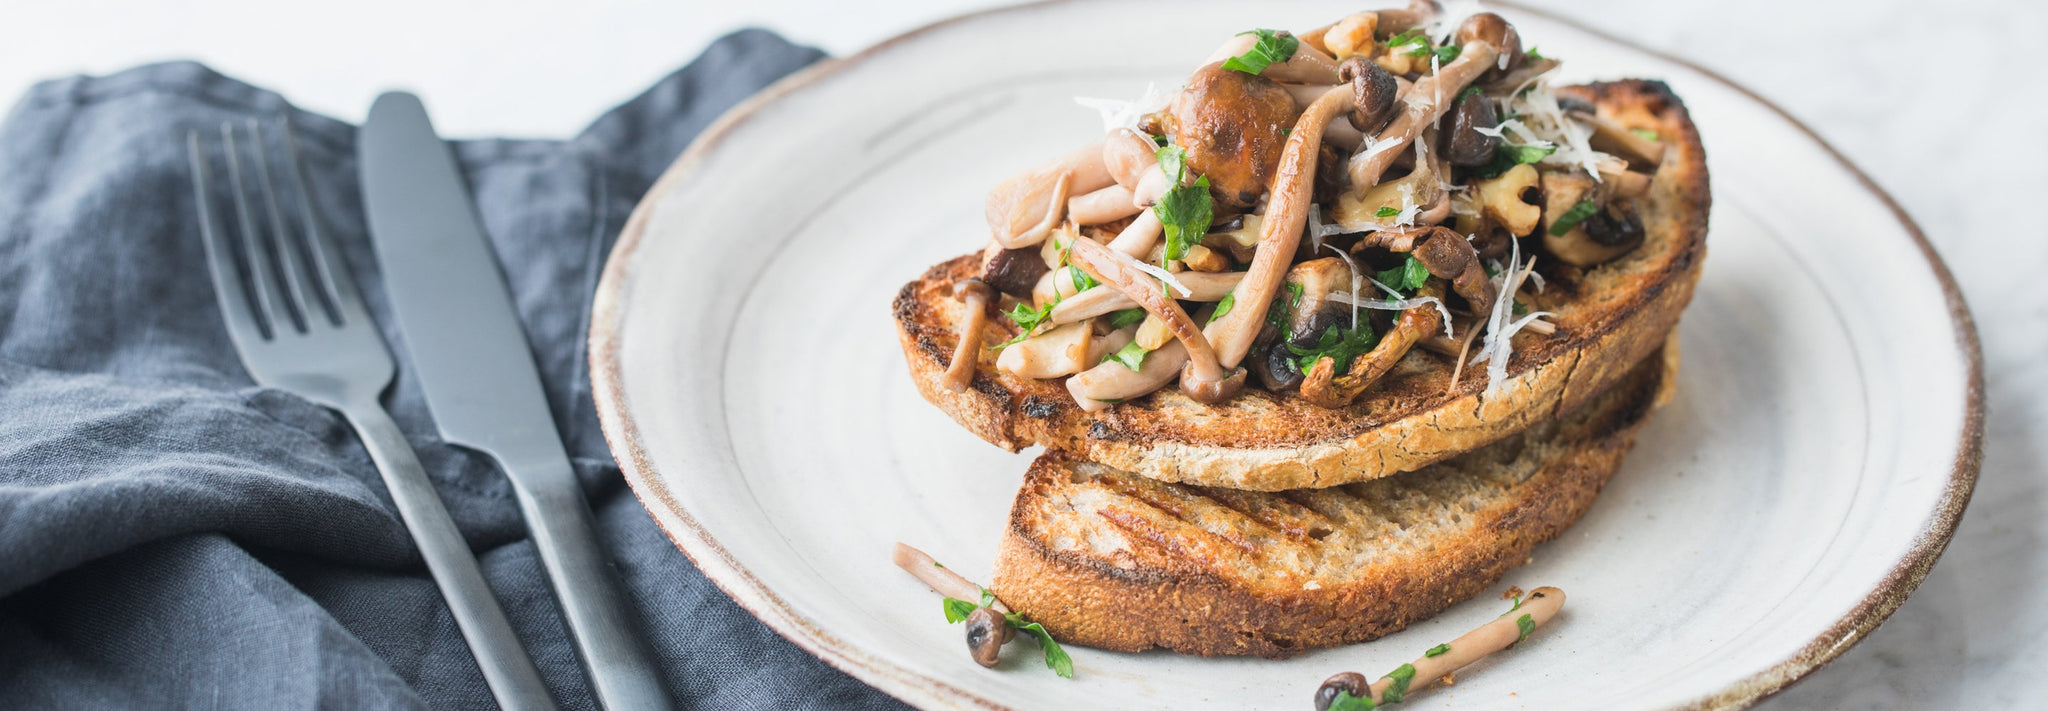 Wild Mushrooms and Walnuts on Toast - Gozney . Roccbox